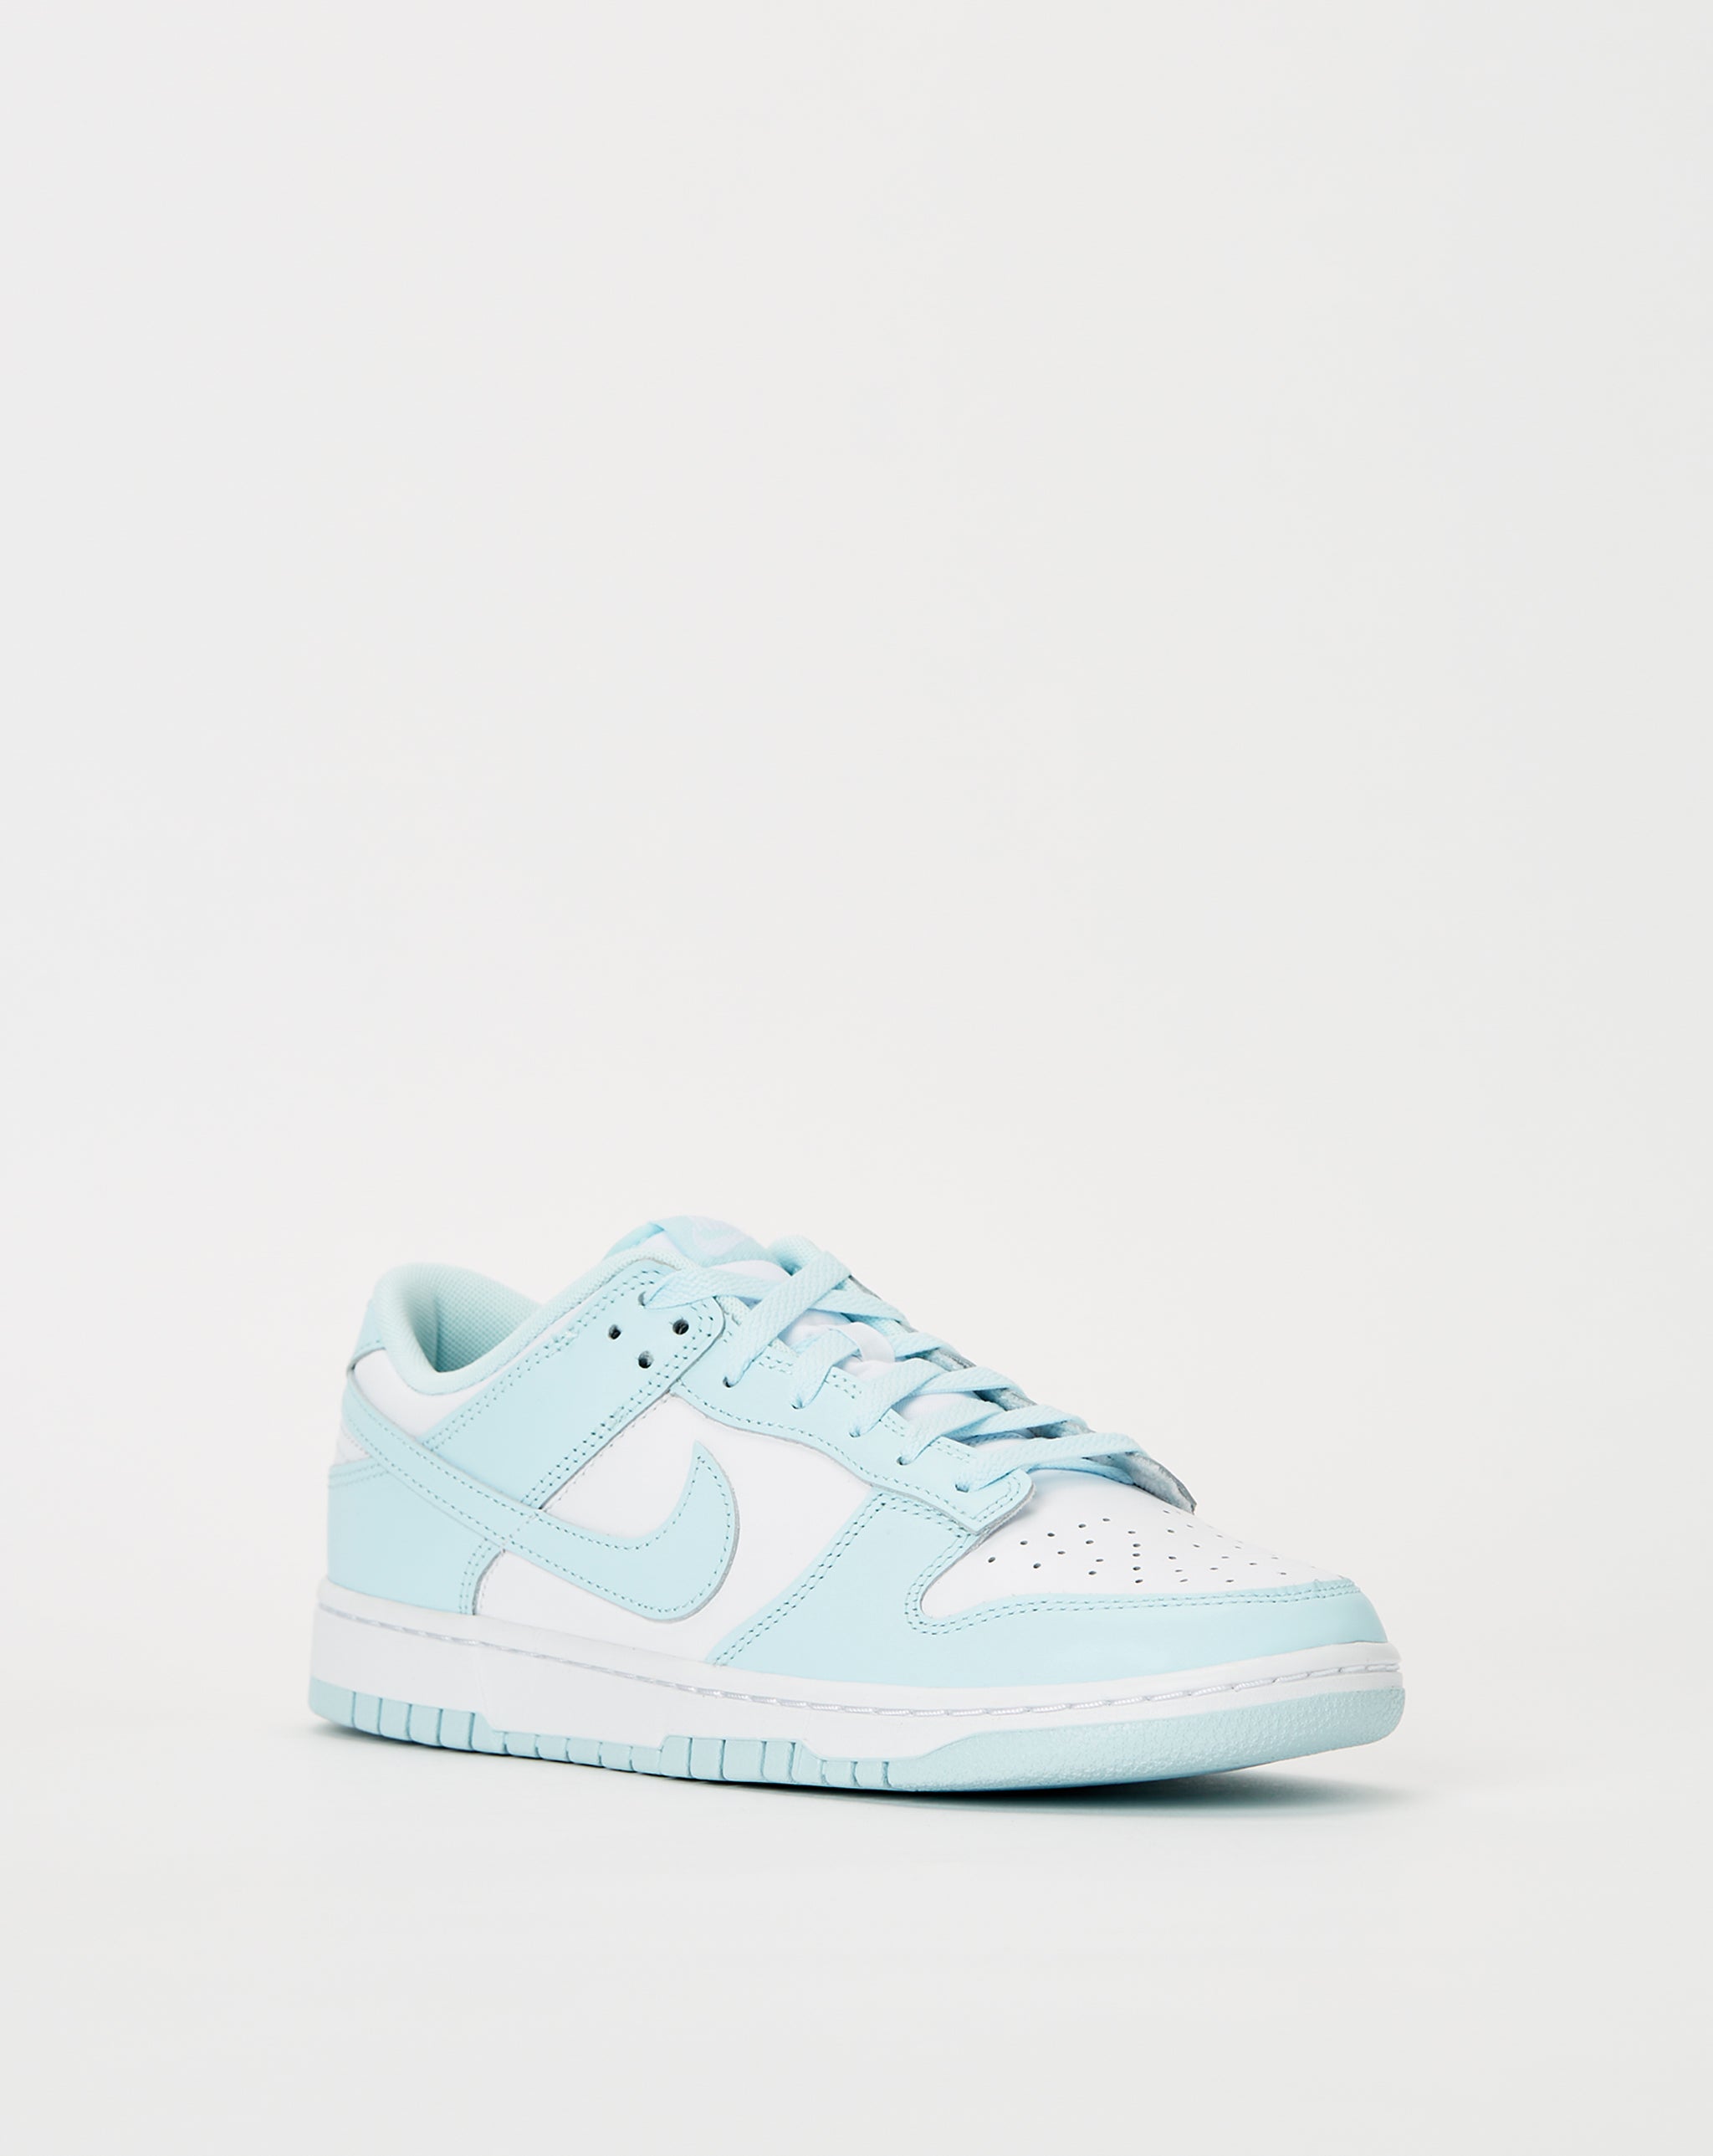 Nike Stable for a plated shoe 'Glacier Blue'  - Cheap Erlebniswelt-fliegenfischen Jordan outlet